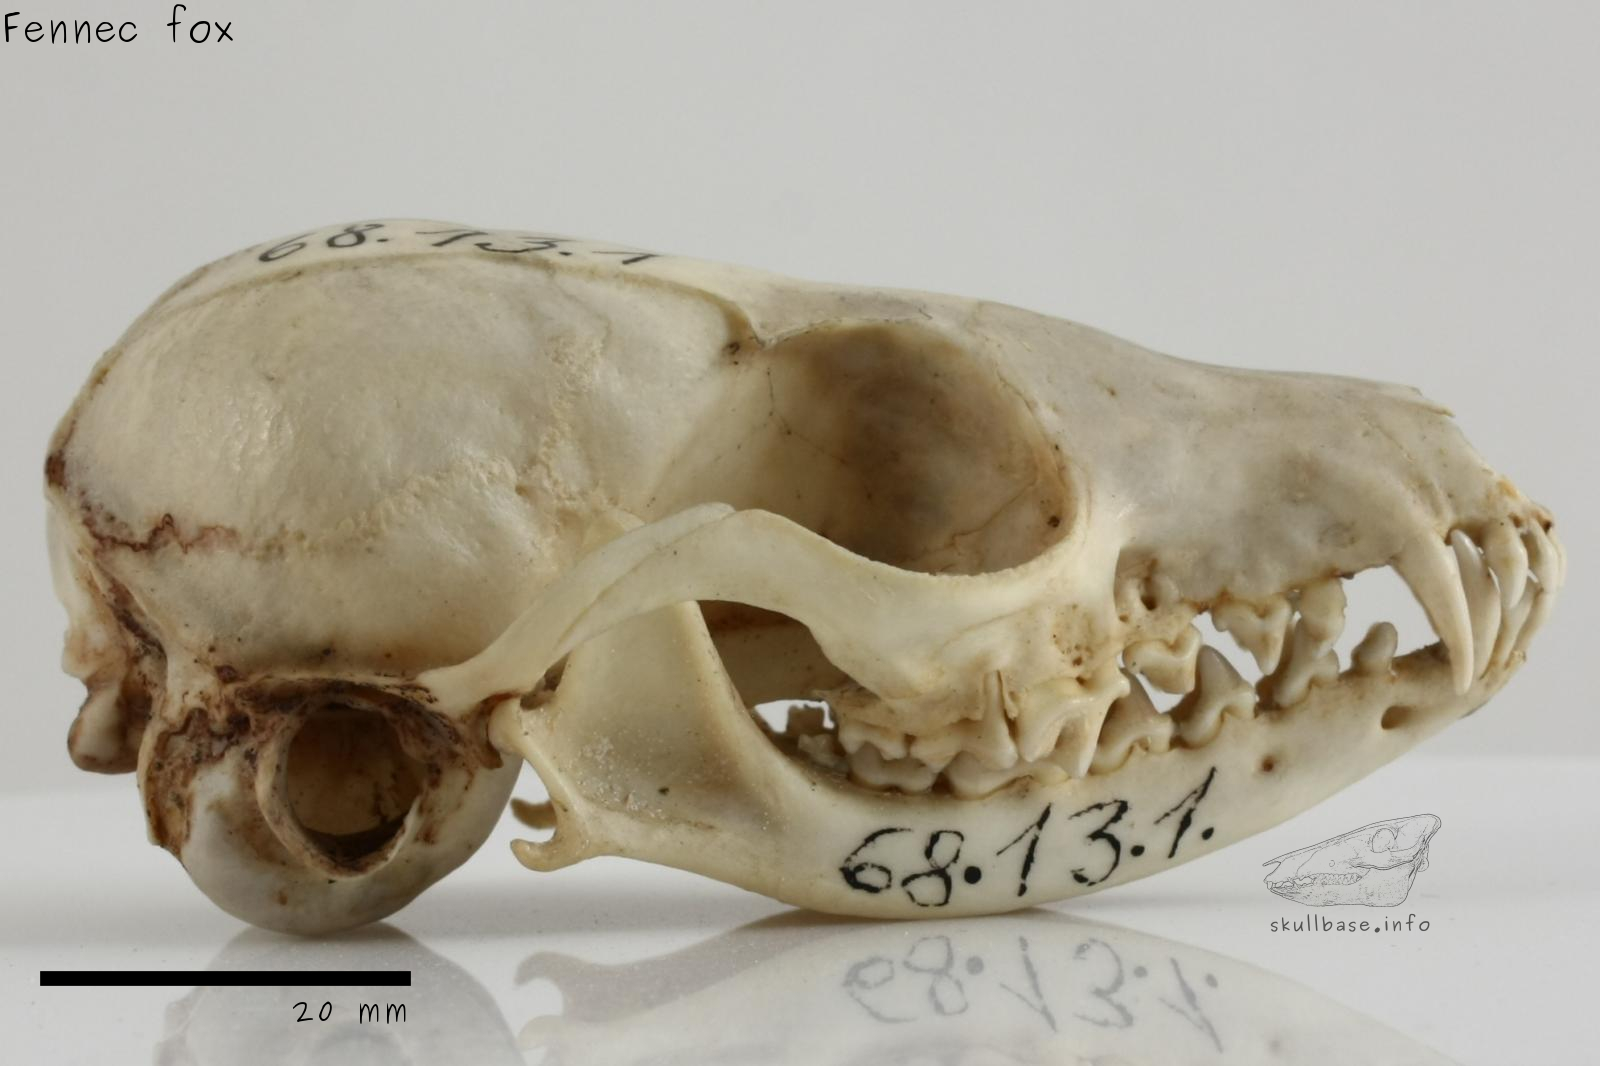 Fennec fox (Vulpes zerda) skull lateral view